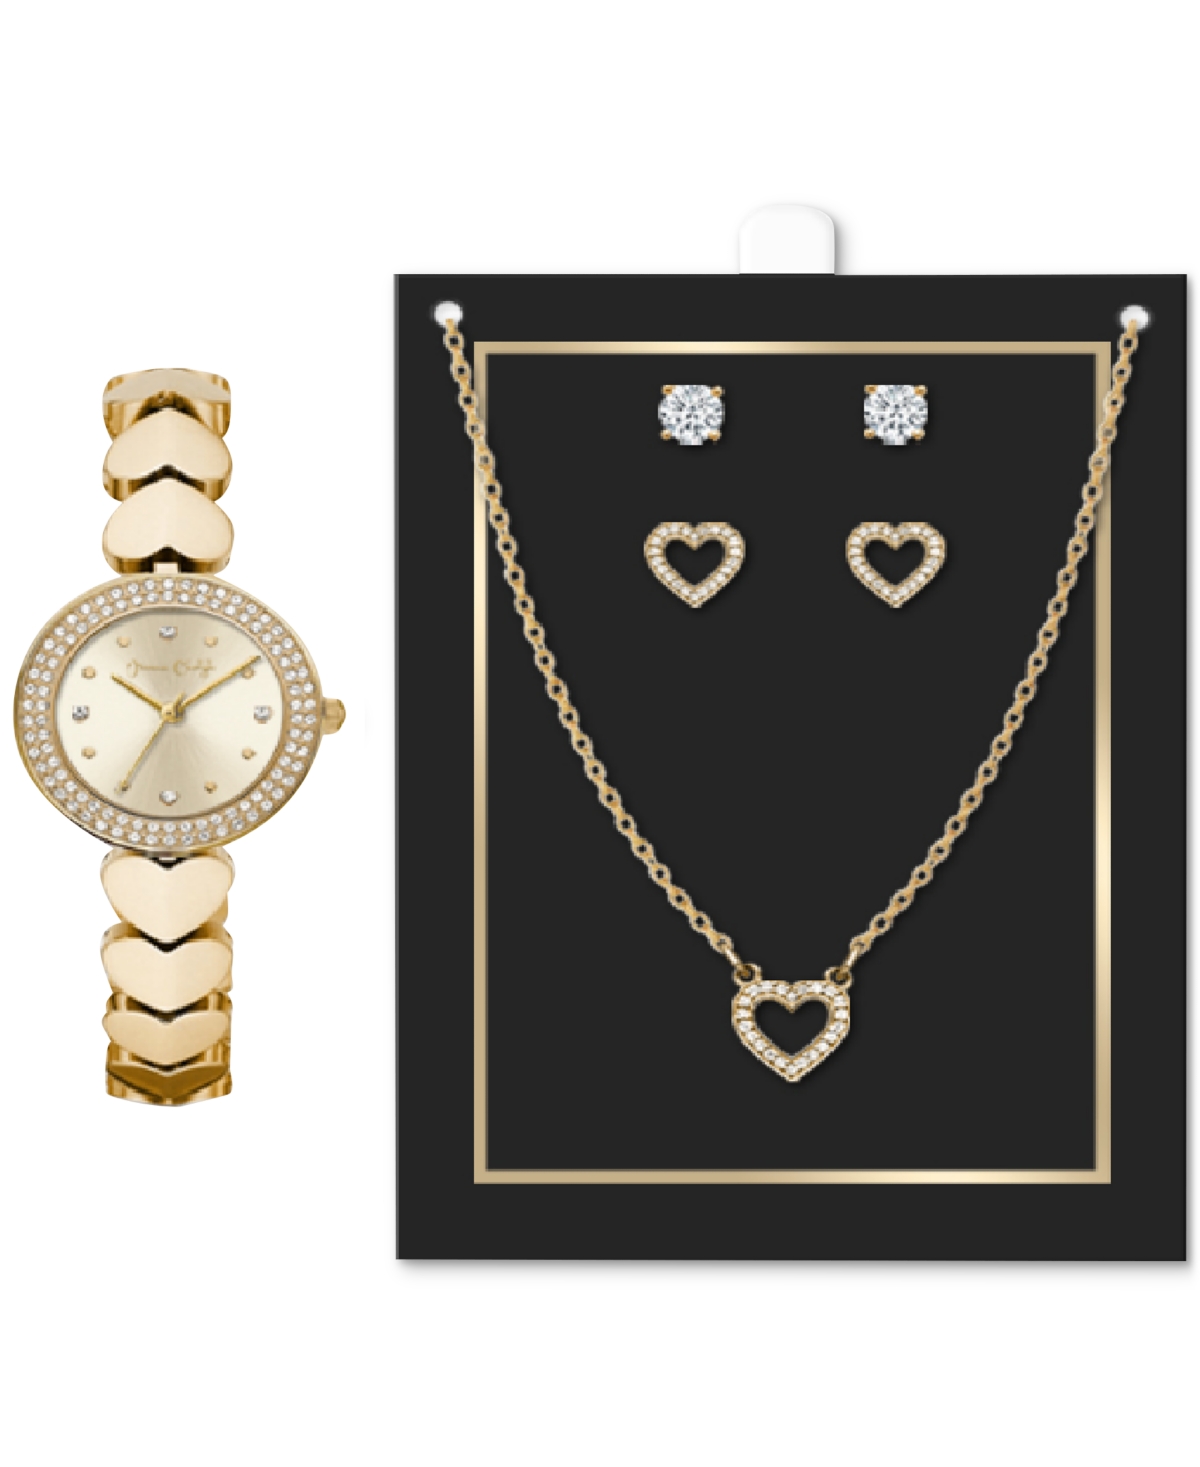 Jessica Carlyle Women's Heart-link Bracelet Watch 28mm Jewelry Gift Set In Gold